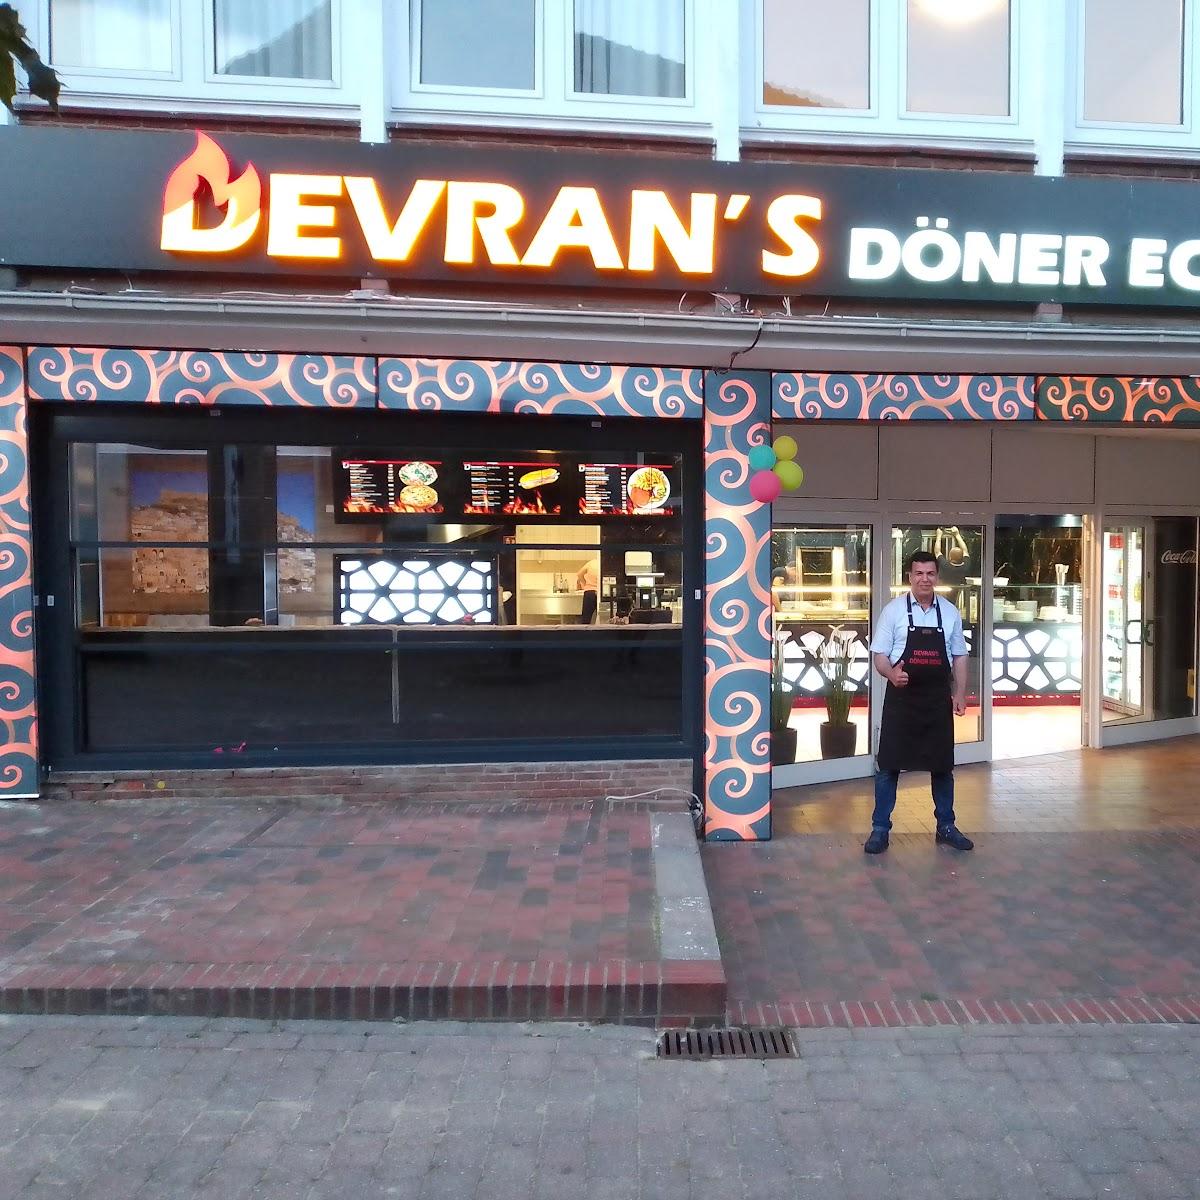 Restaurant "Devran‘s Döner Ecke" in Oldenburg in Holstein